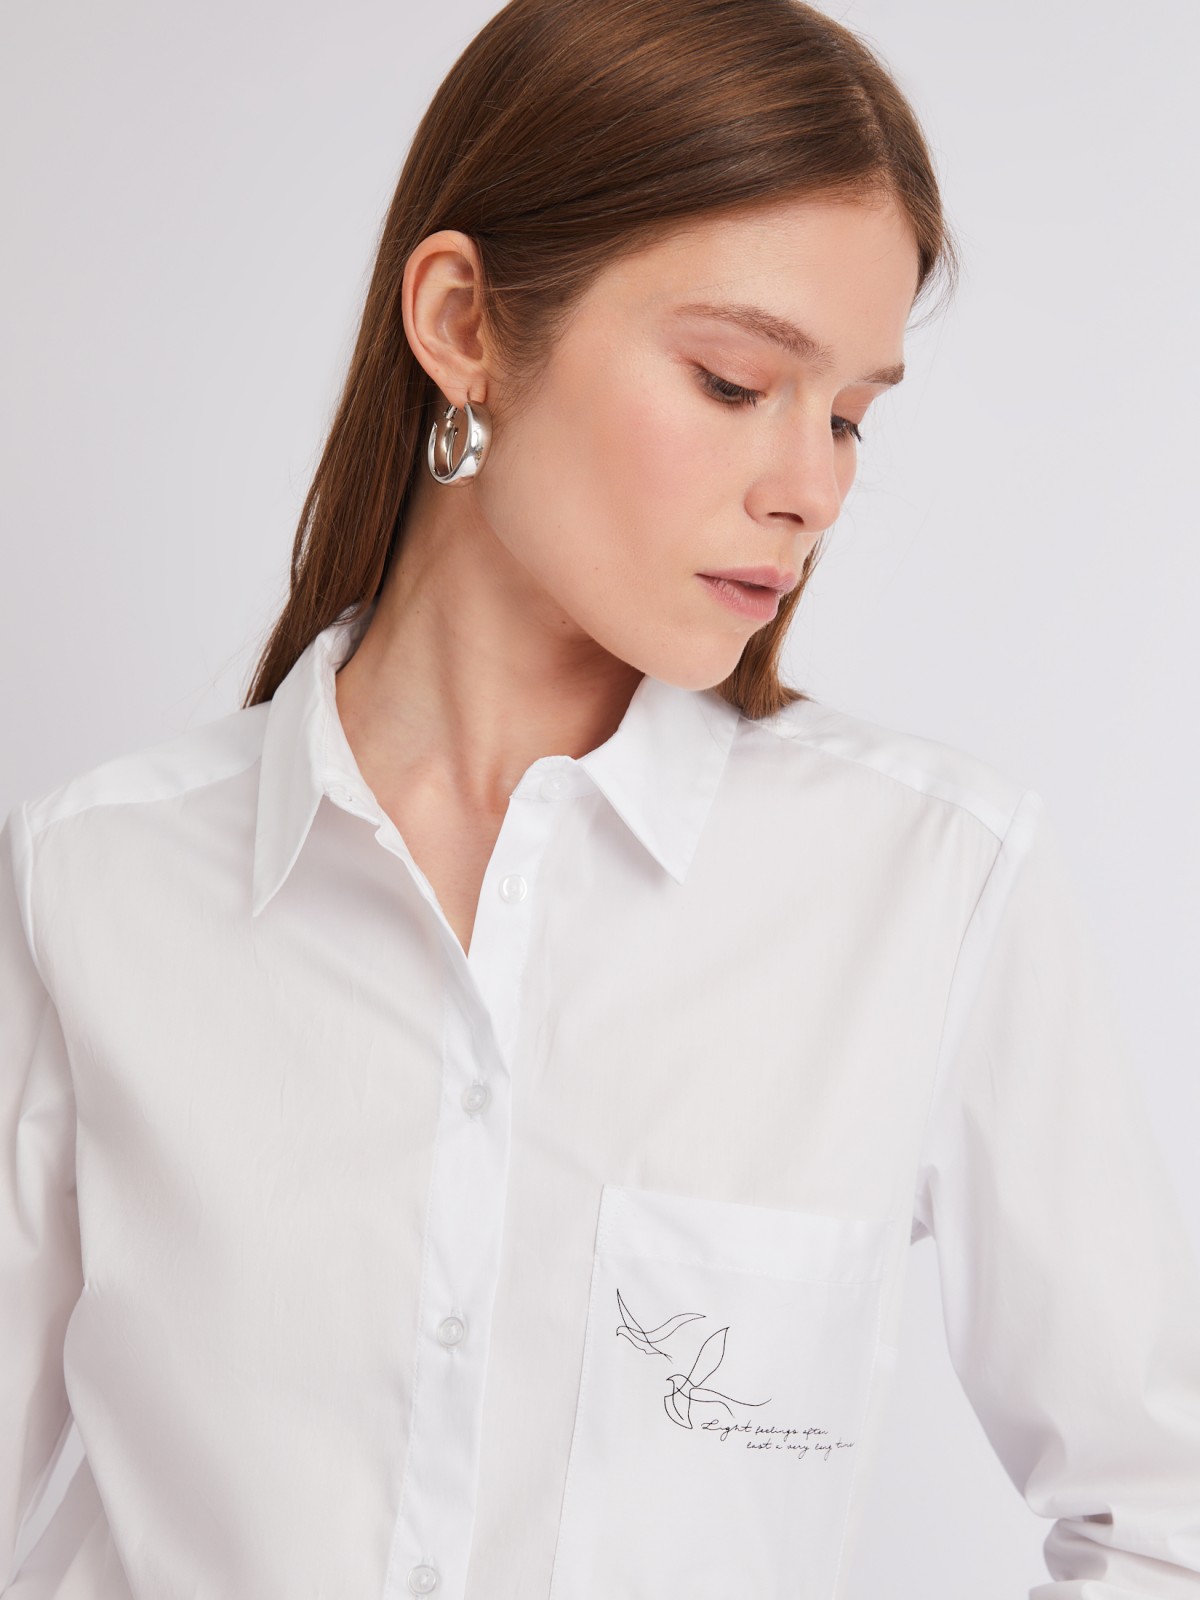 Офисная рубашка прямого силуэта с акцентом на кармане zolla 223311159042, цвет белый, размер S - фото 5